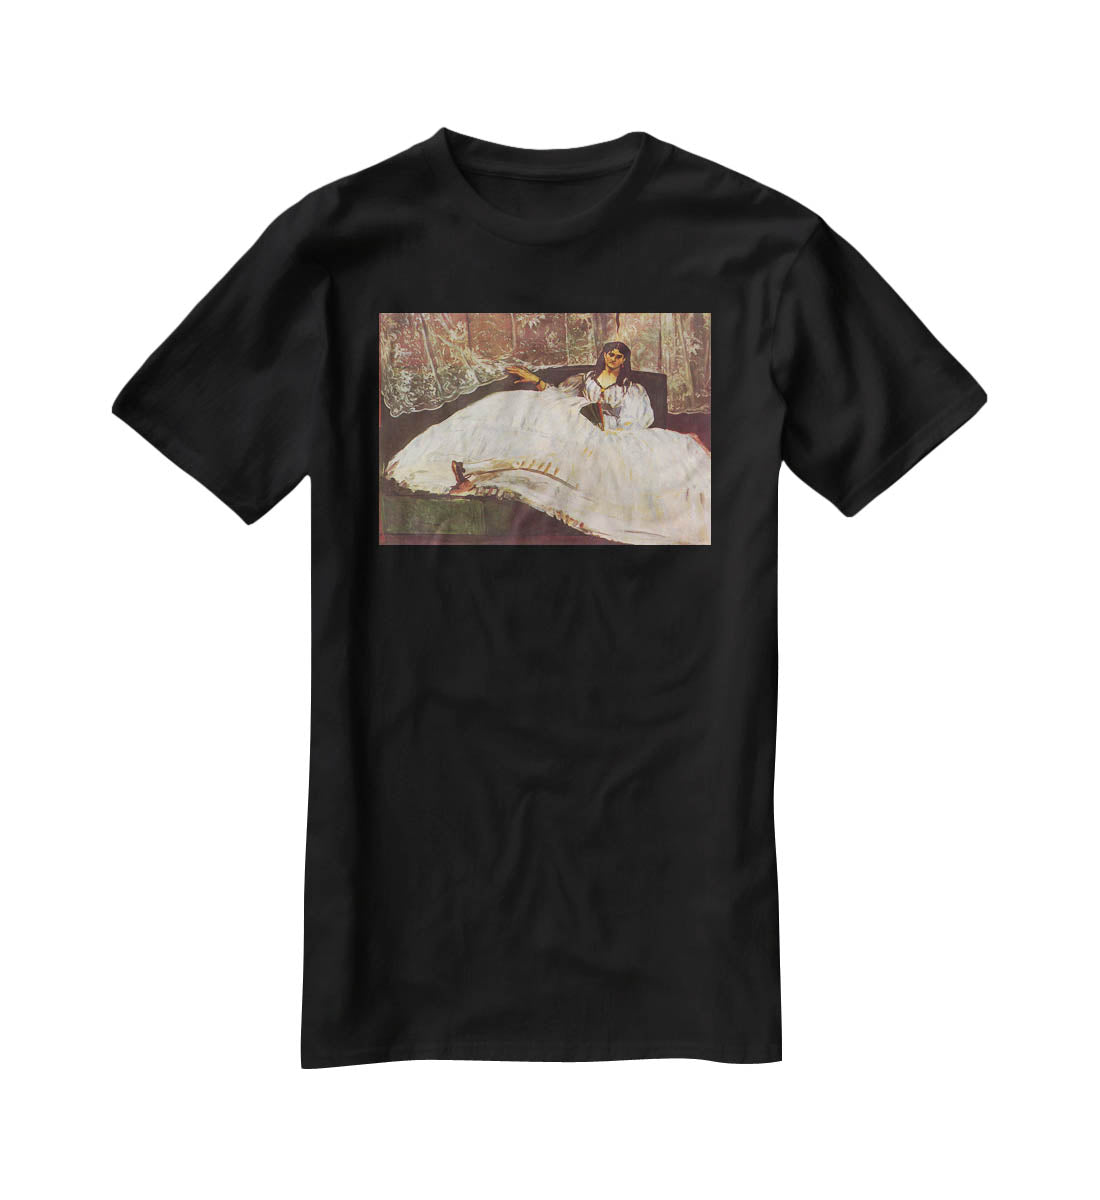 Lady with fan by Manet T-Shirt - Canvas Art Rocks - 1